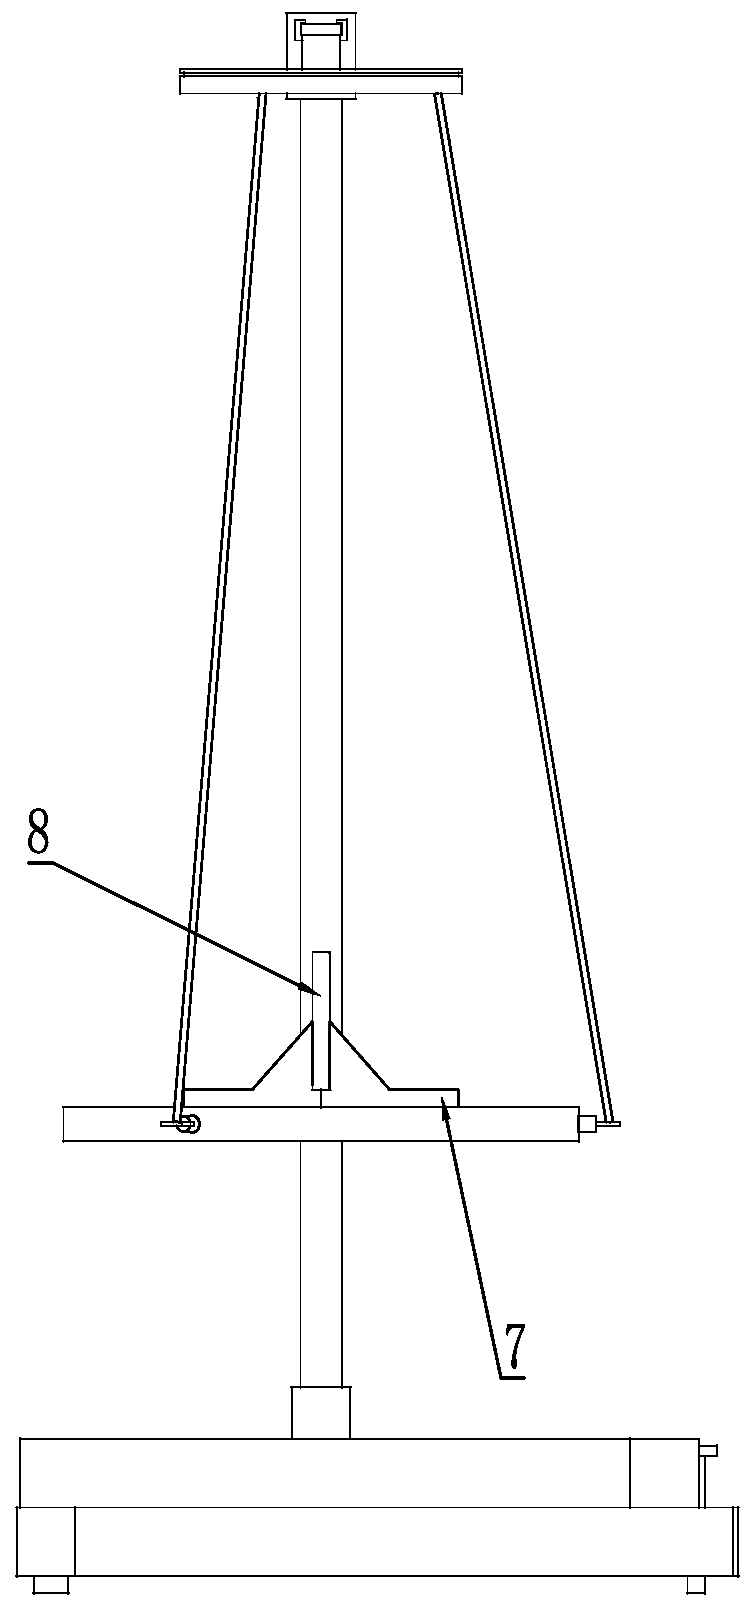 Three-line pendulum capable of verifying rigid body rotational inertia perpendicular axis theorem